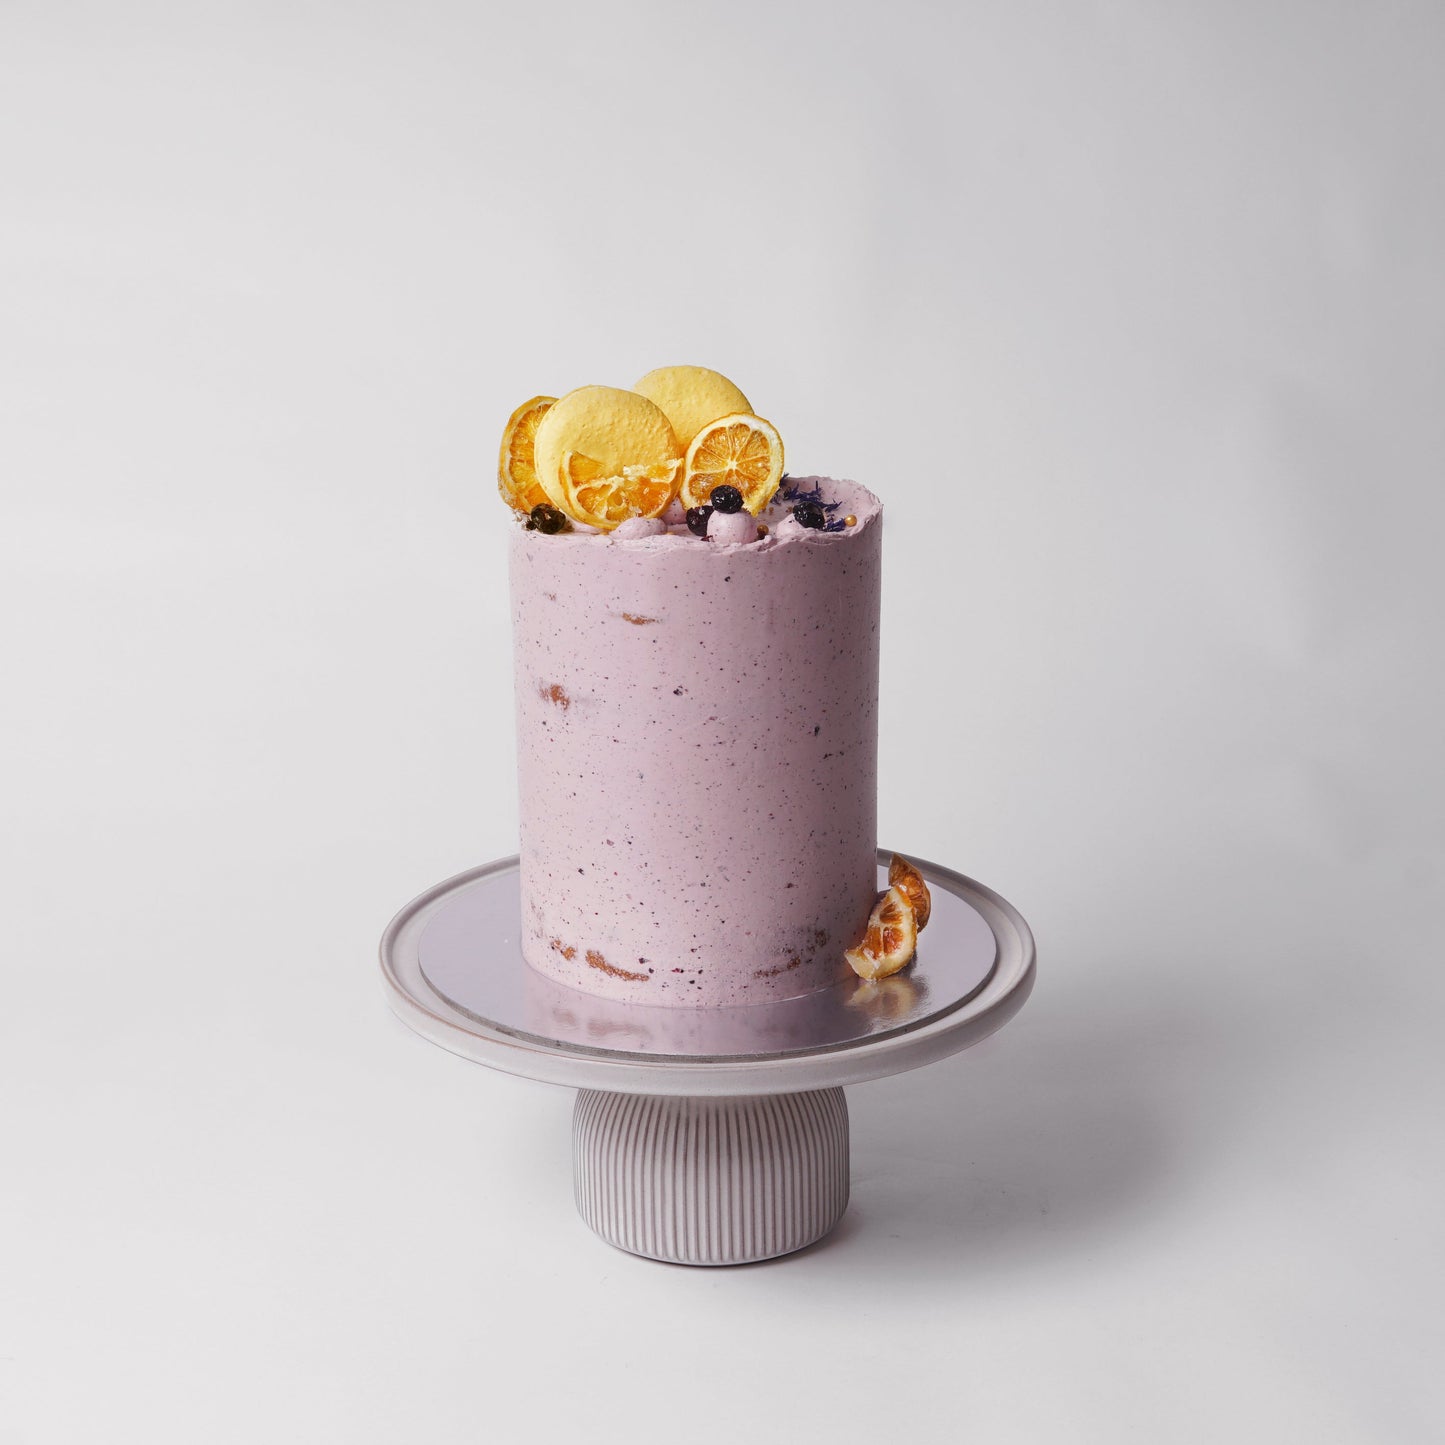 TOMORROW - Lemon & Blueberry Cake